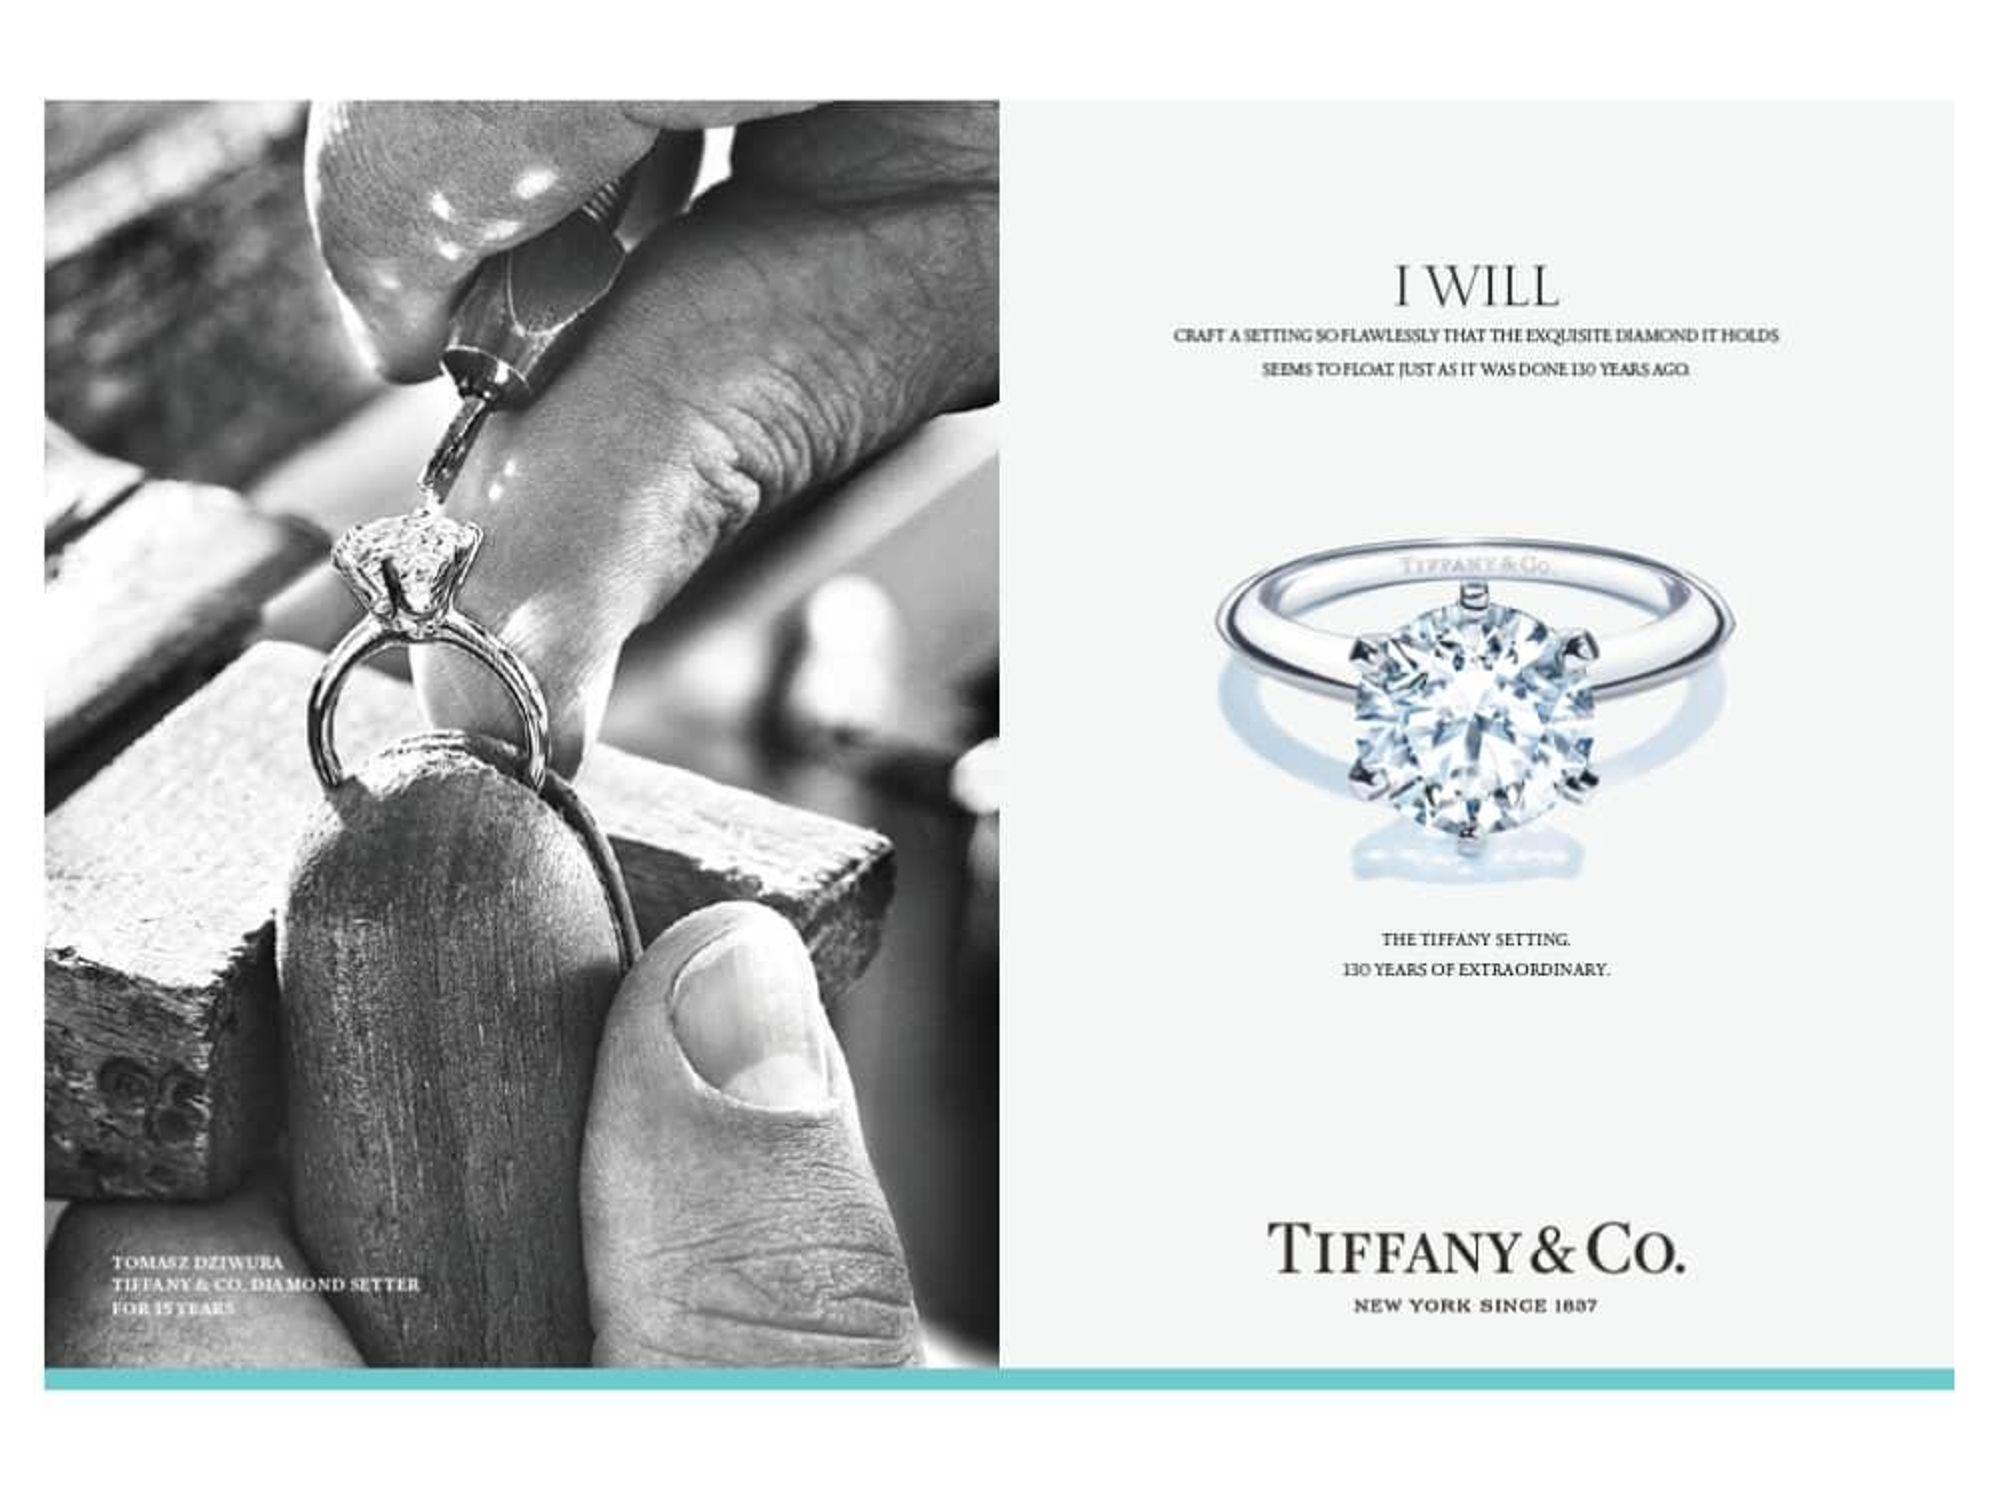 Tiffany & Co. advertisement